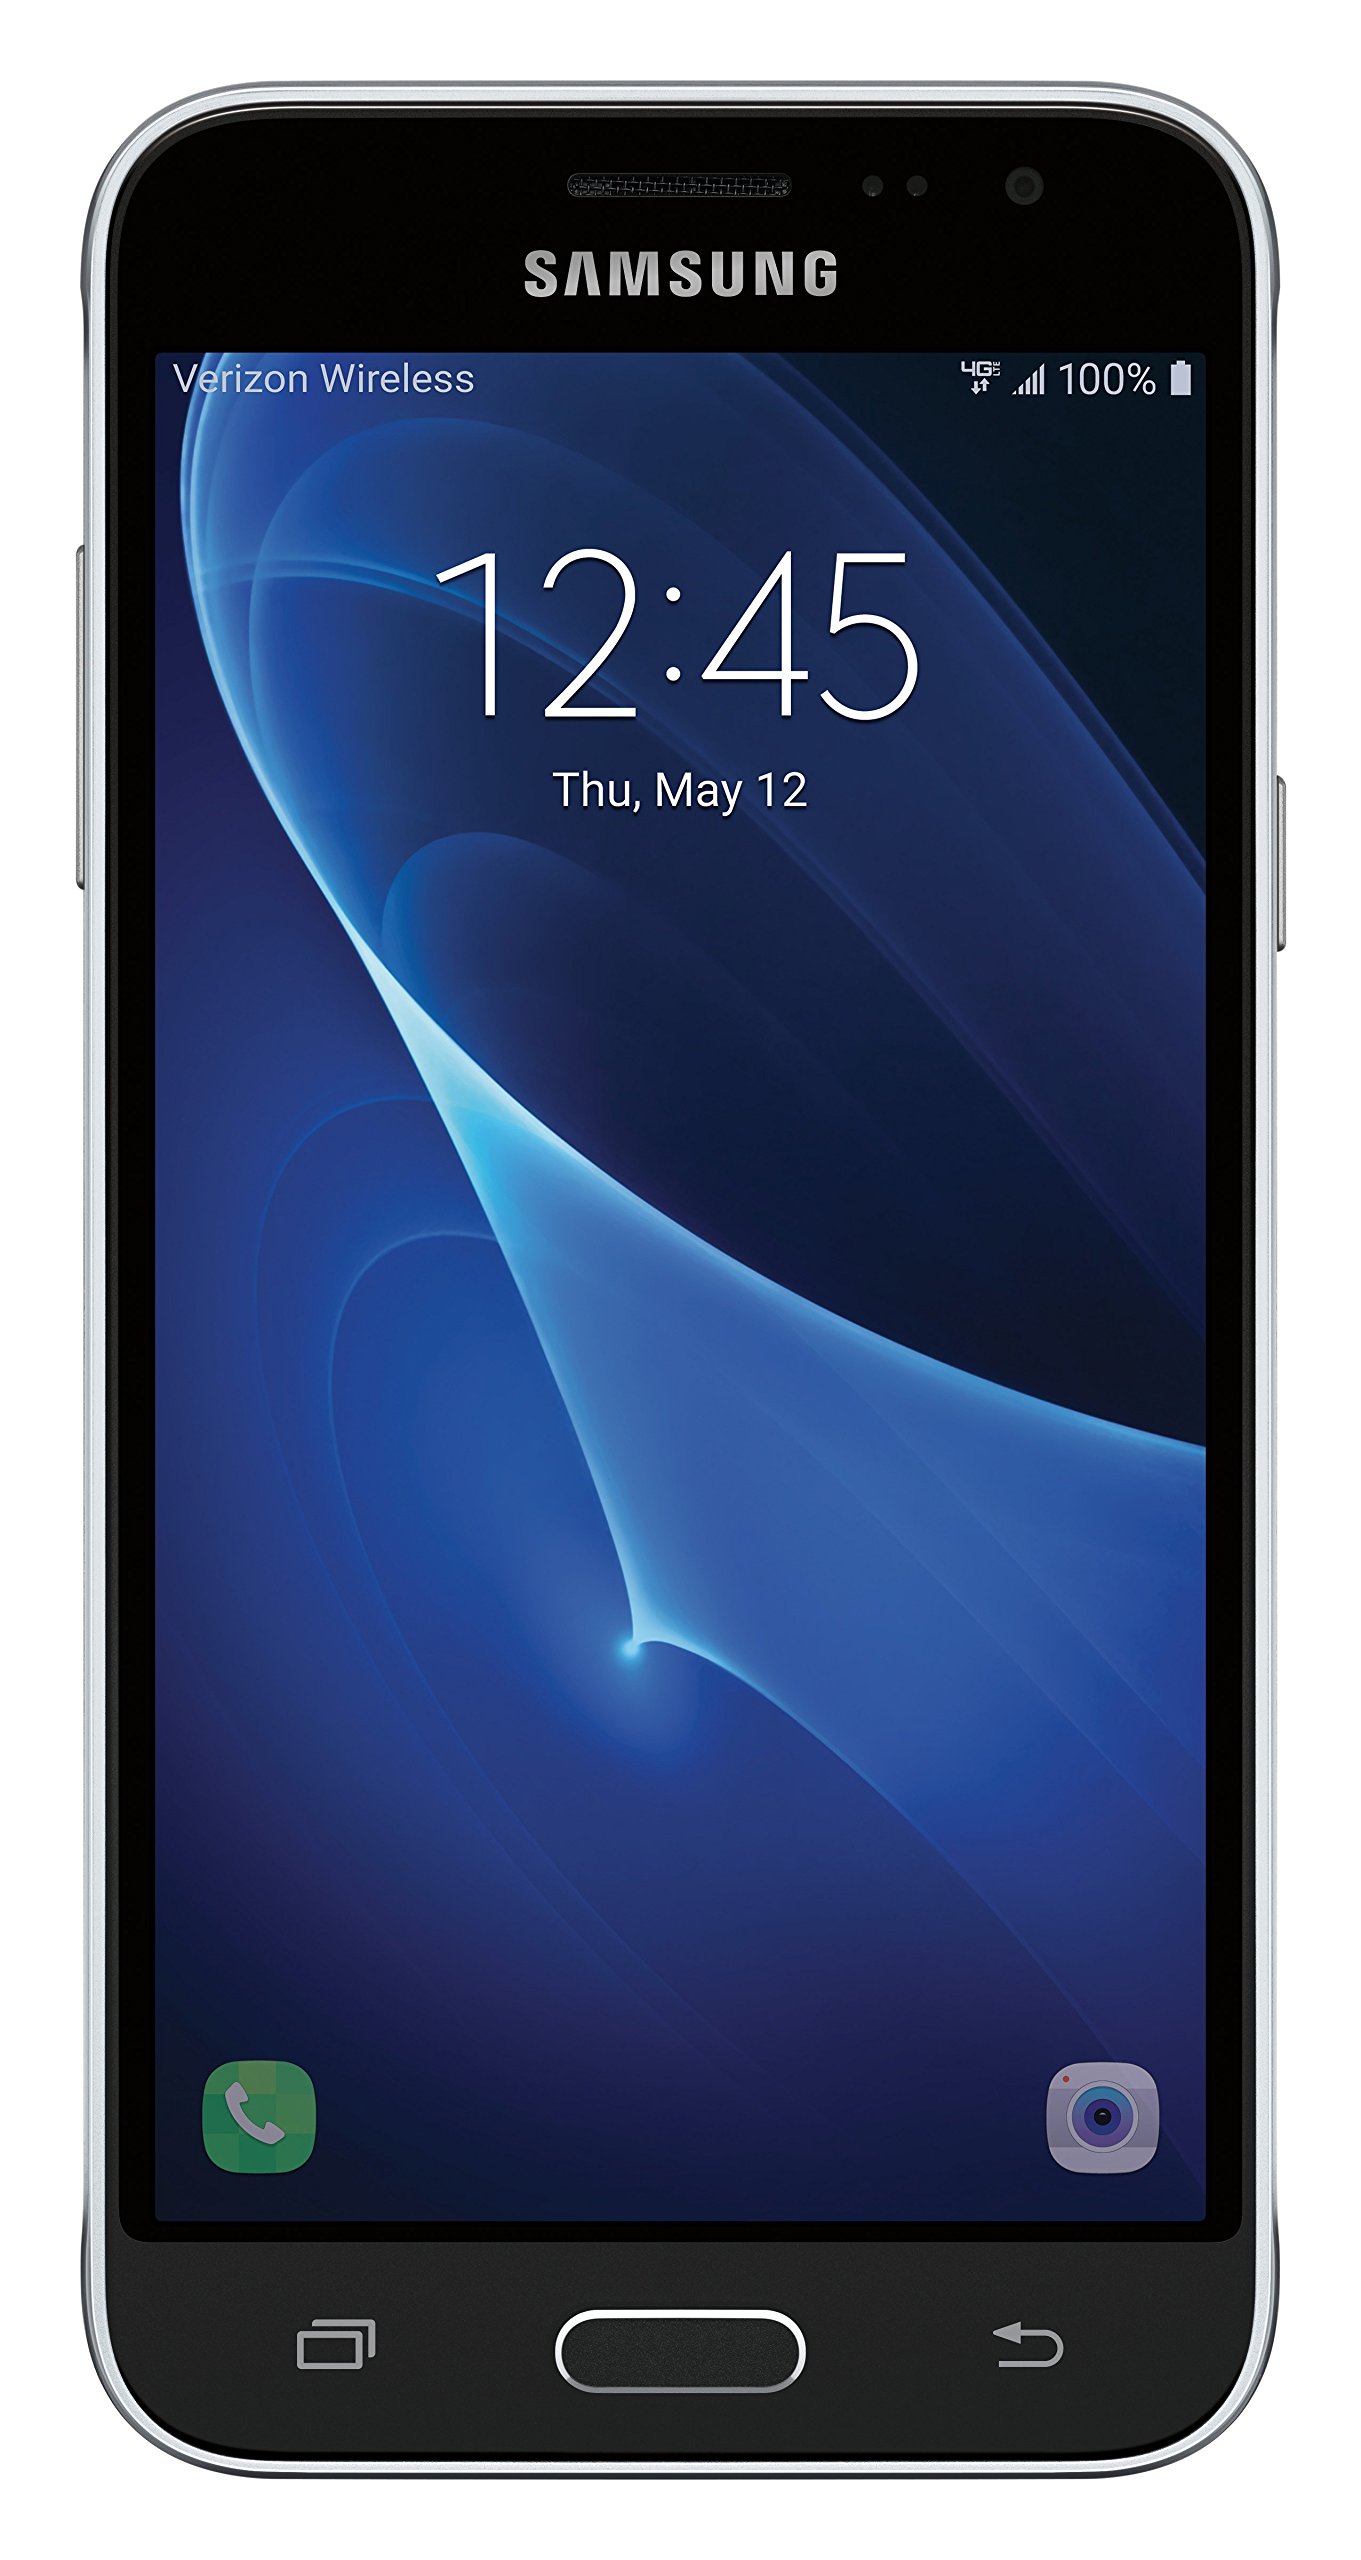 Samsung Galaxy J3, Verizon LTE Prepaid (Black)